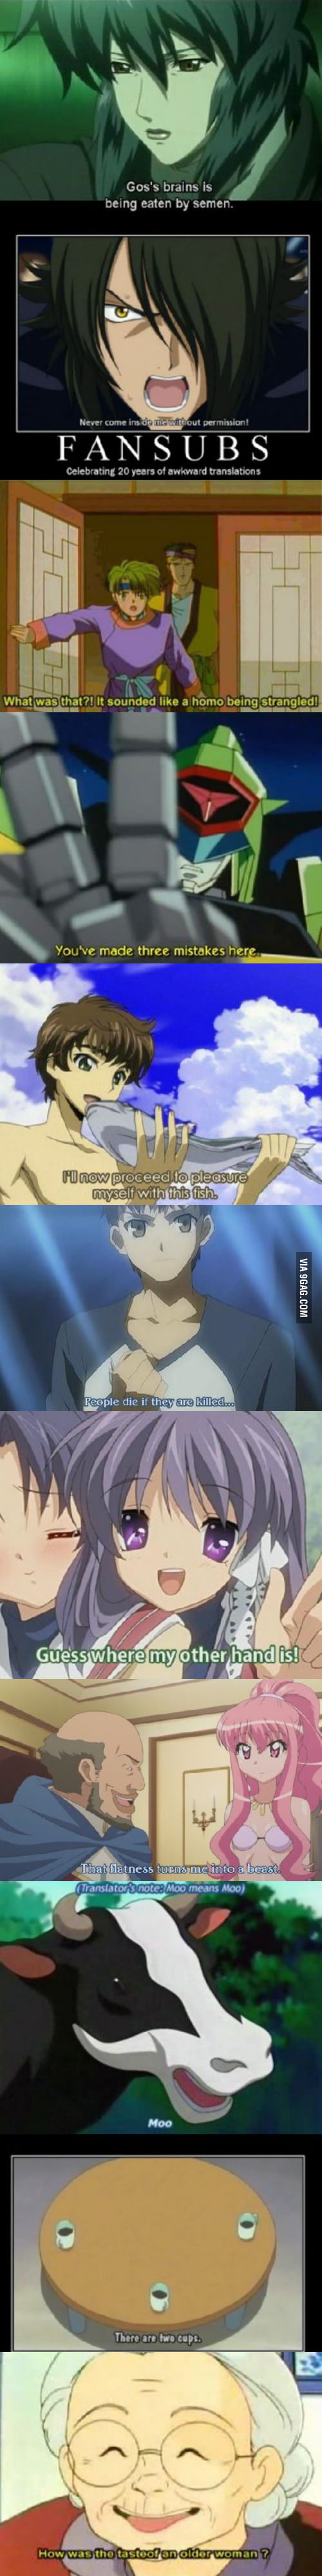 Funny anime subtitles AHAHAH - Imgflip